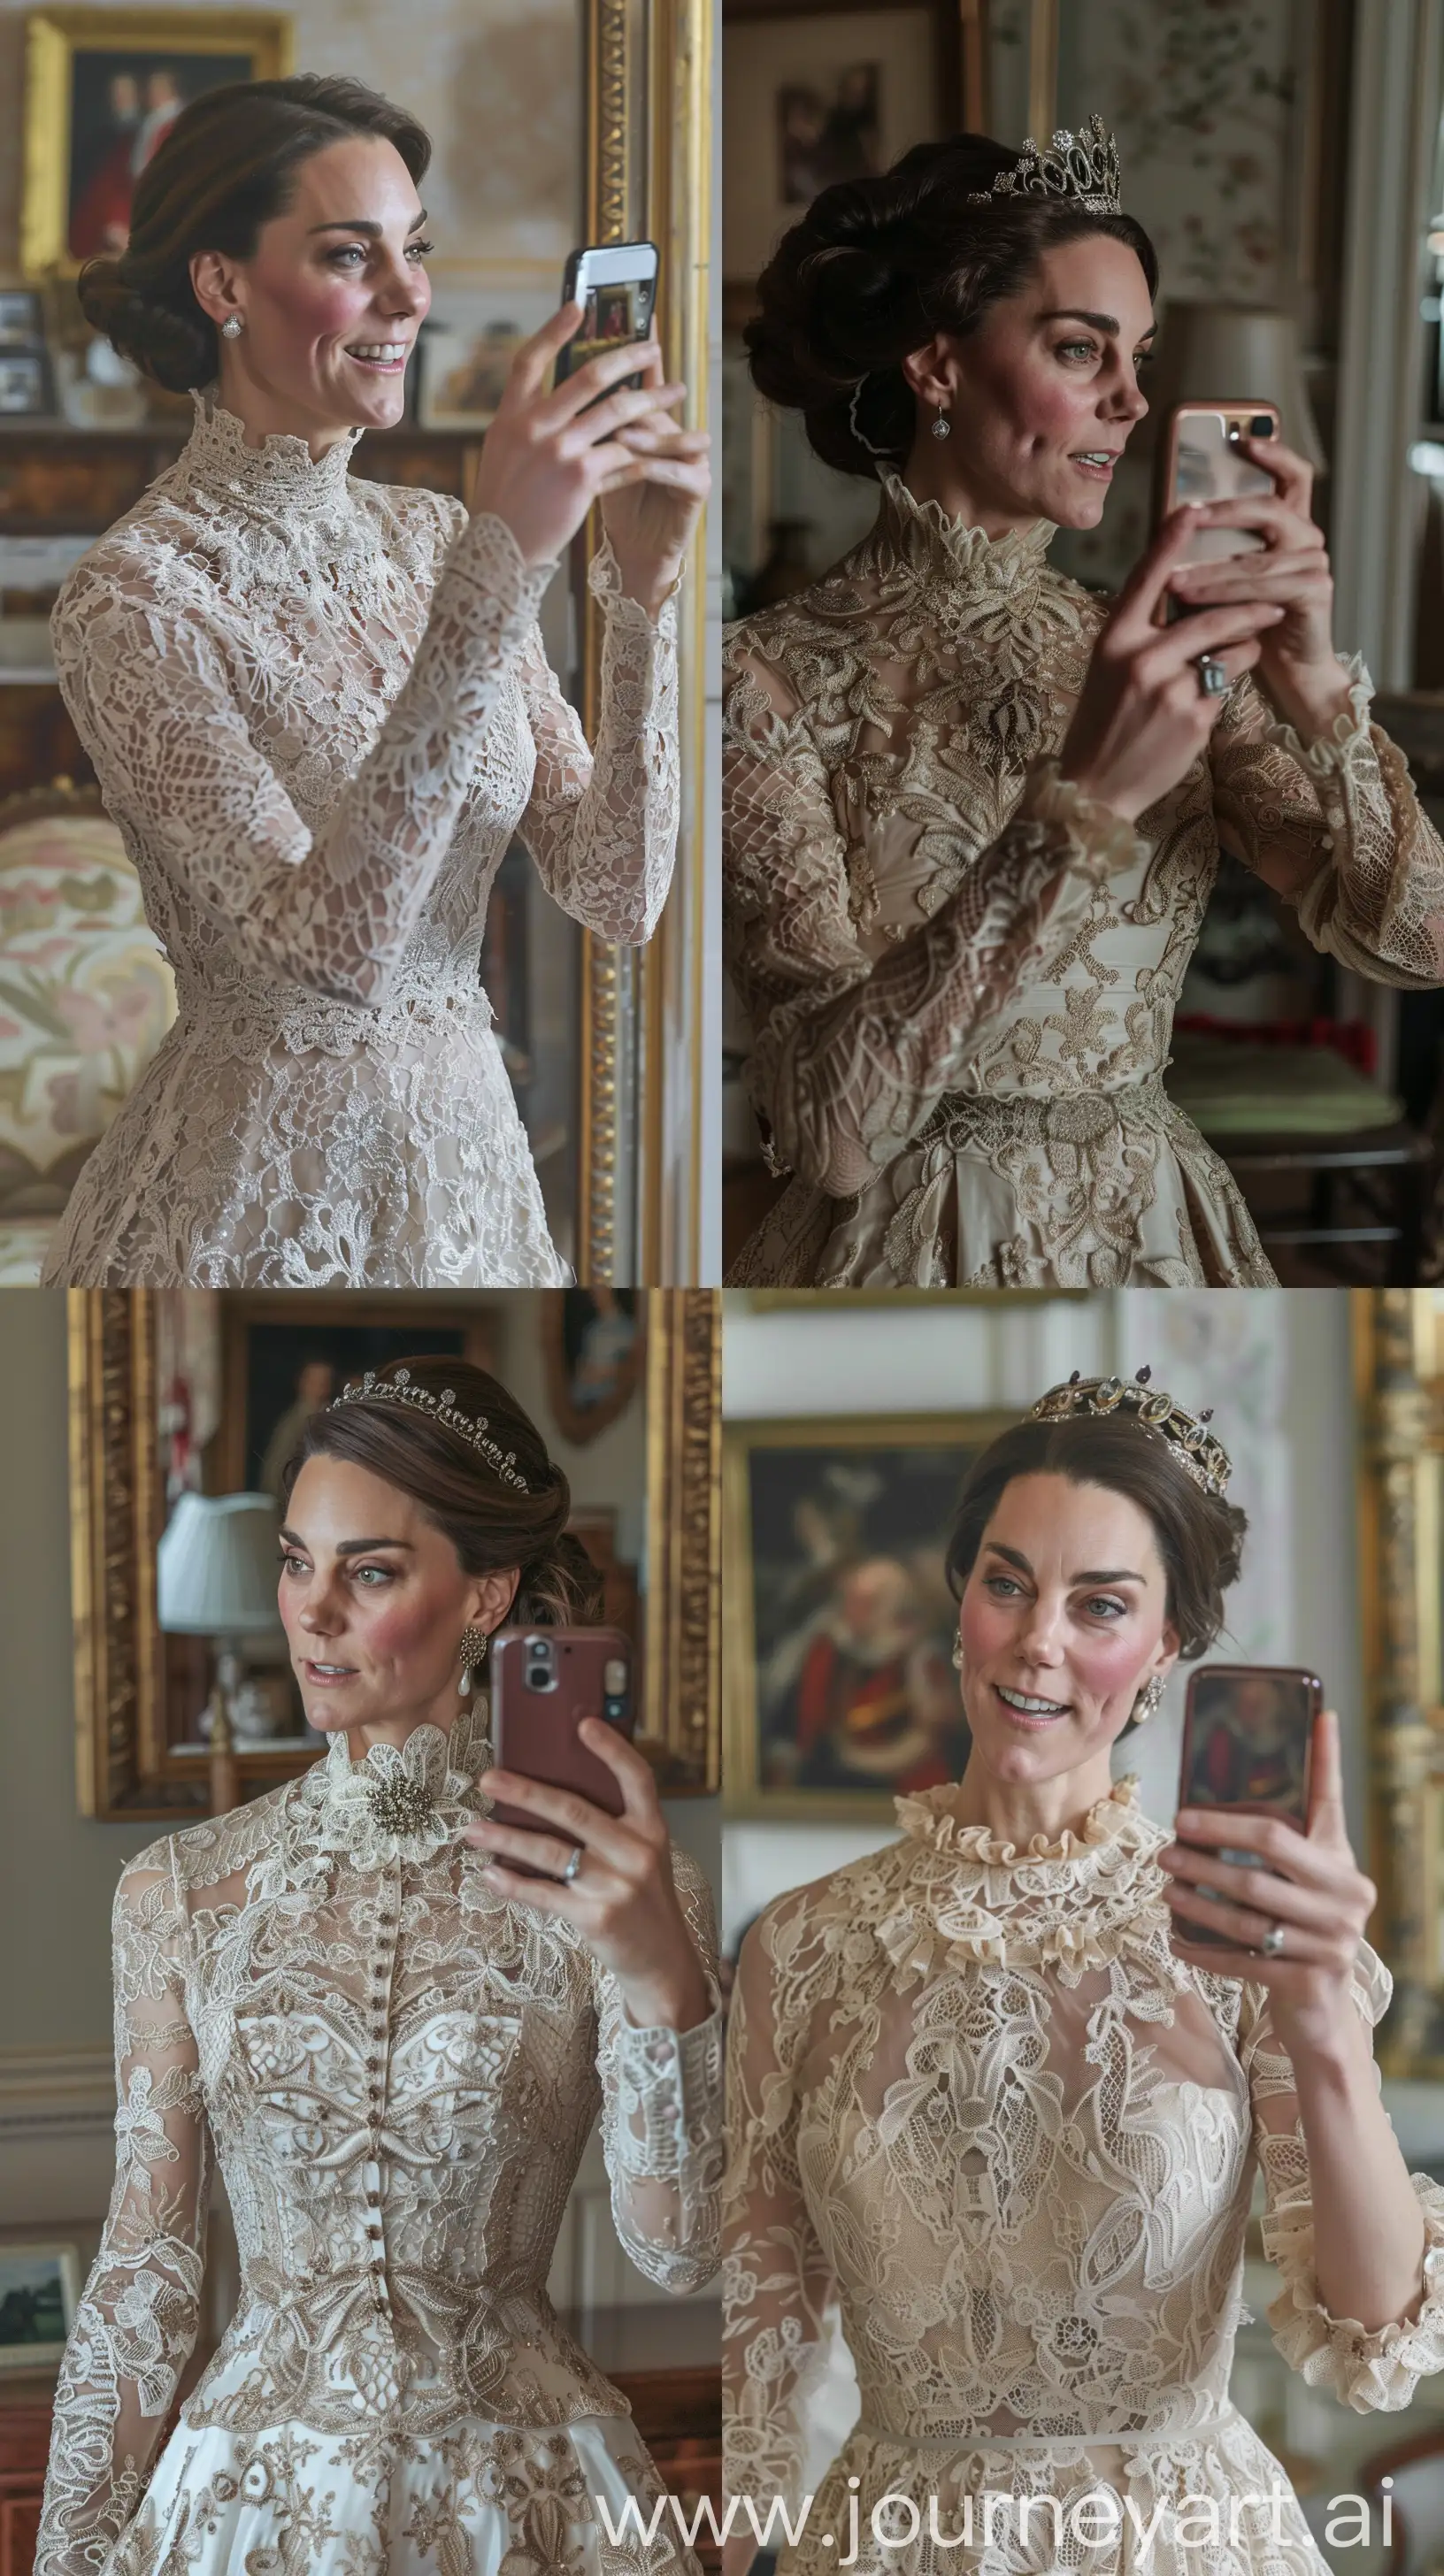 Princess-Kate-Middleton-Taking-a-Selfie-in-Lace-Dress